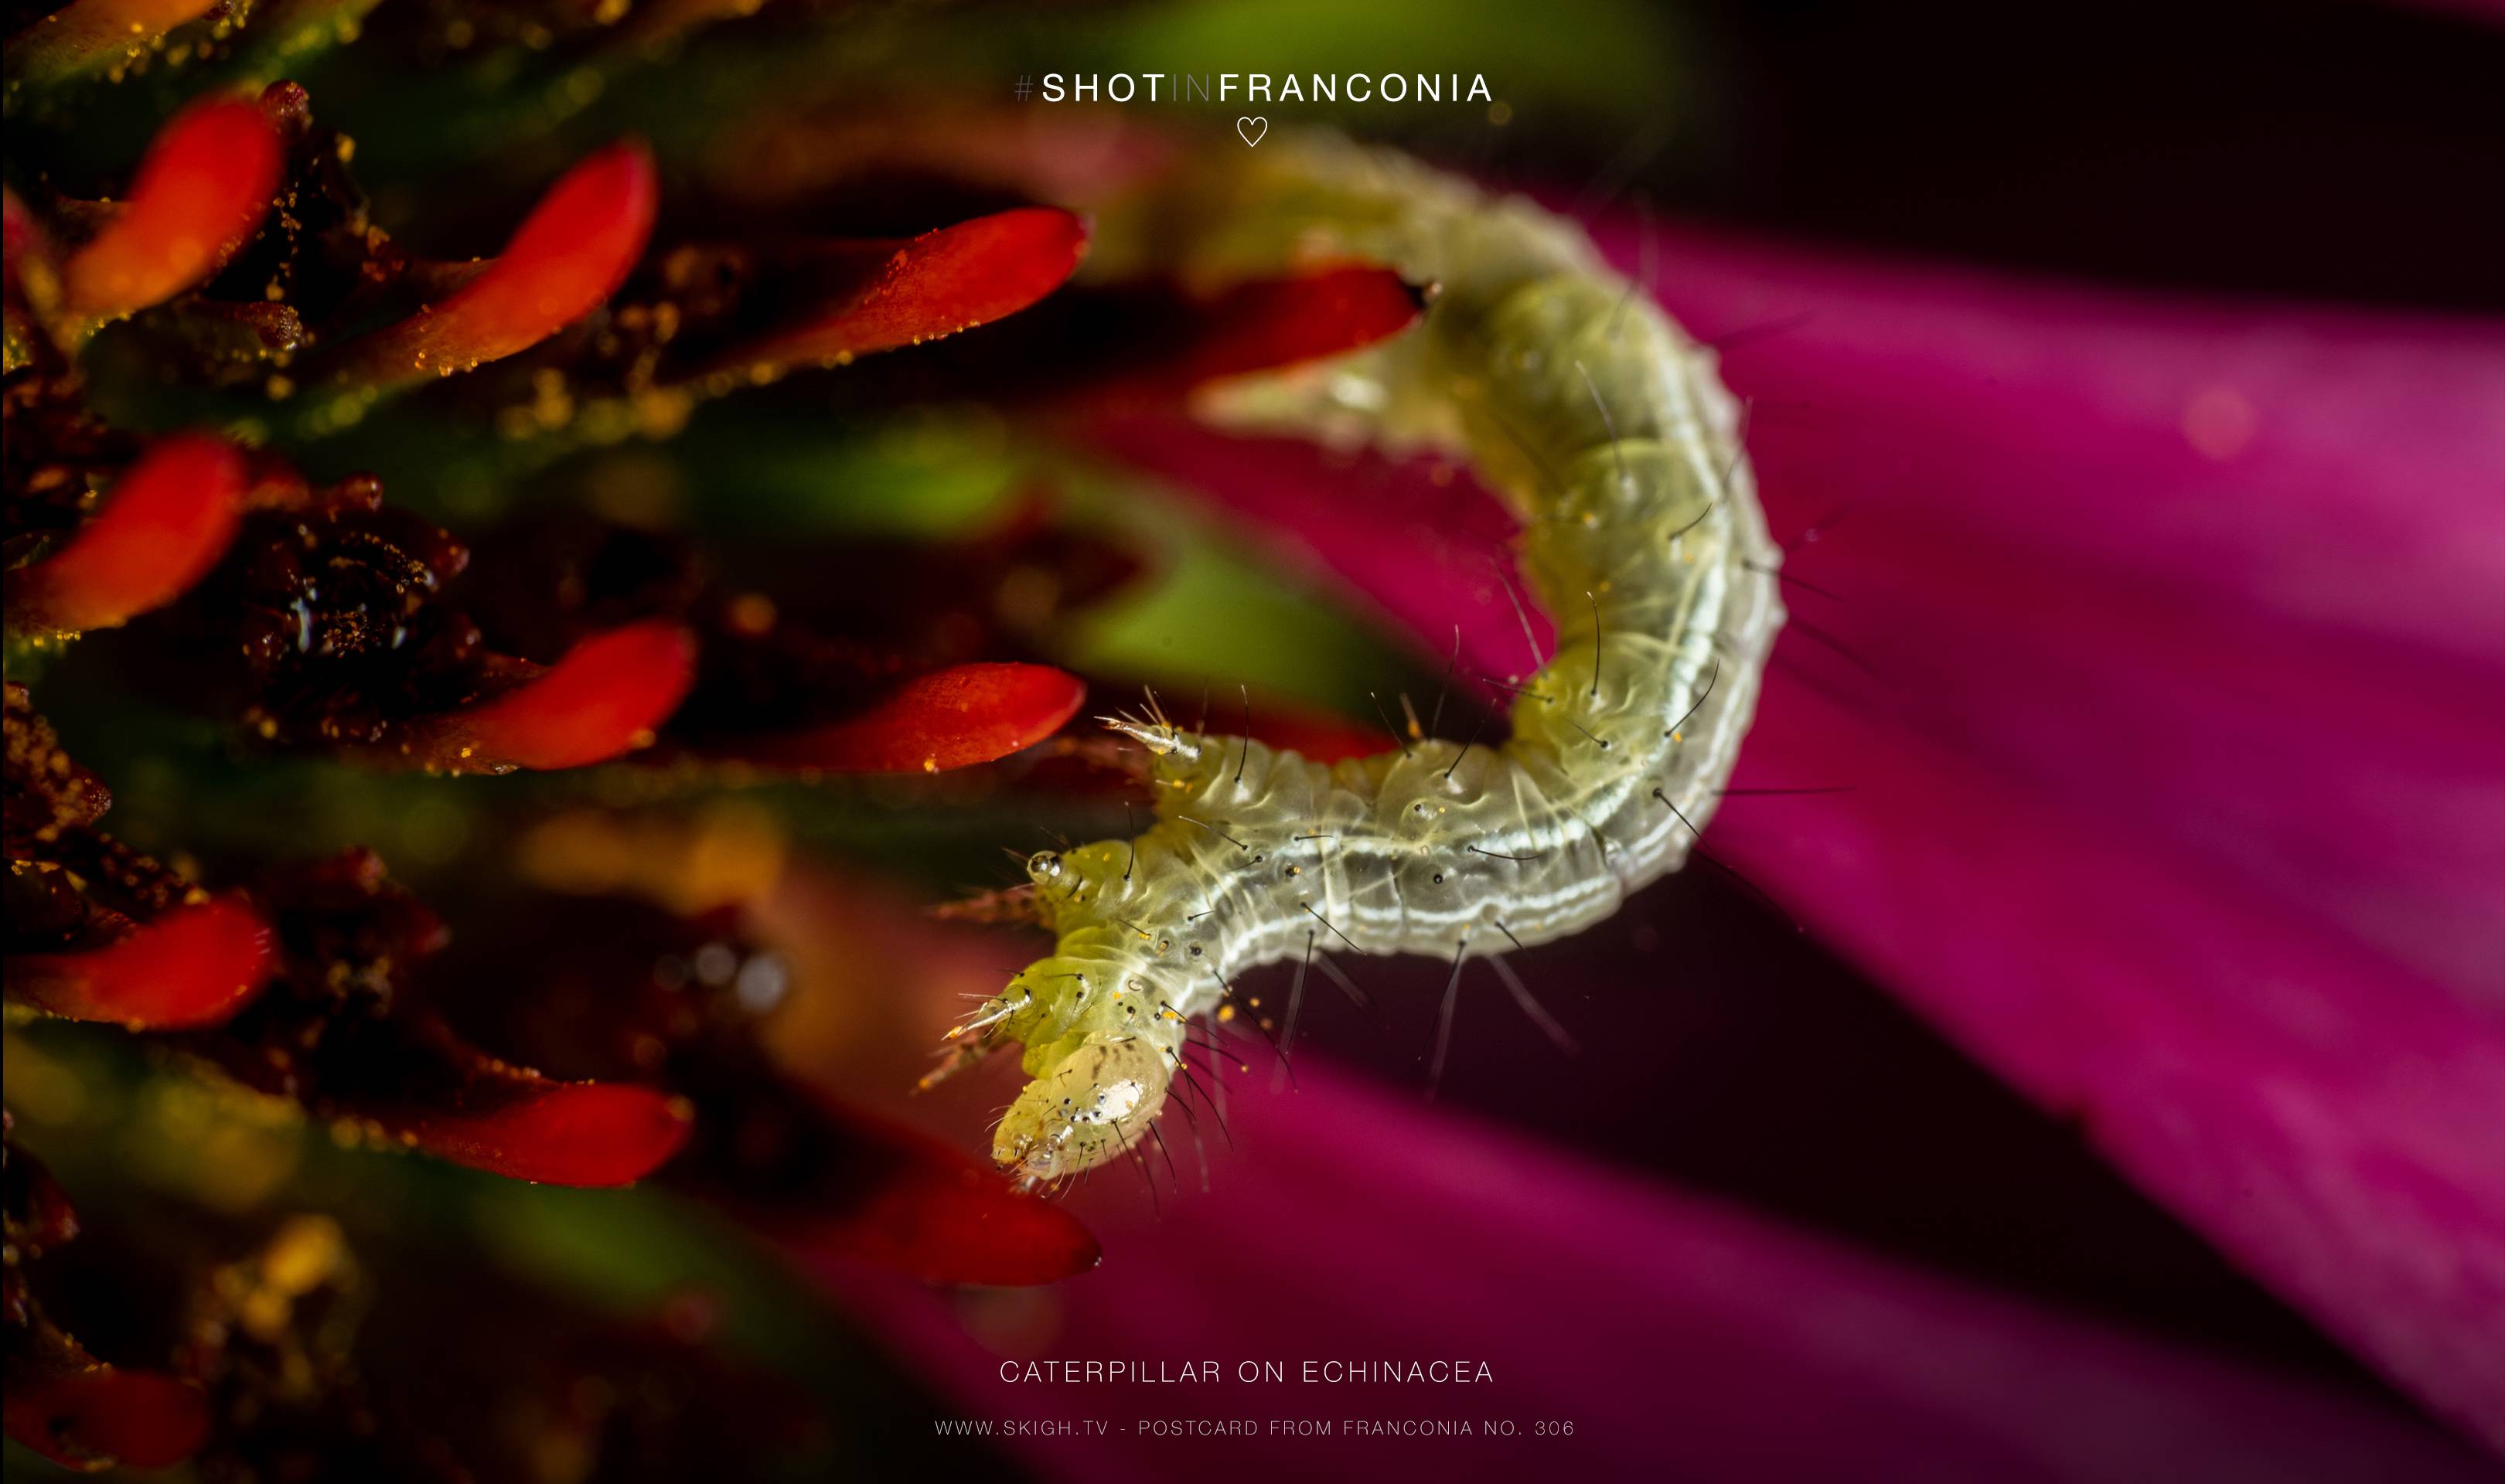 Caterpillar on Echinacea